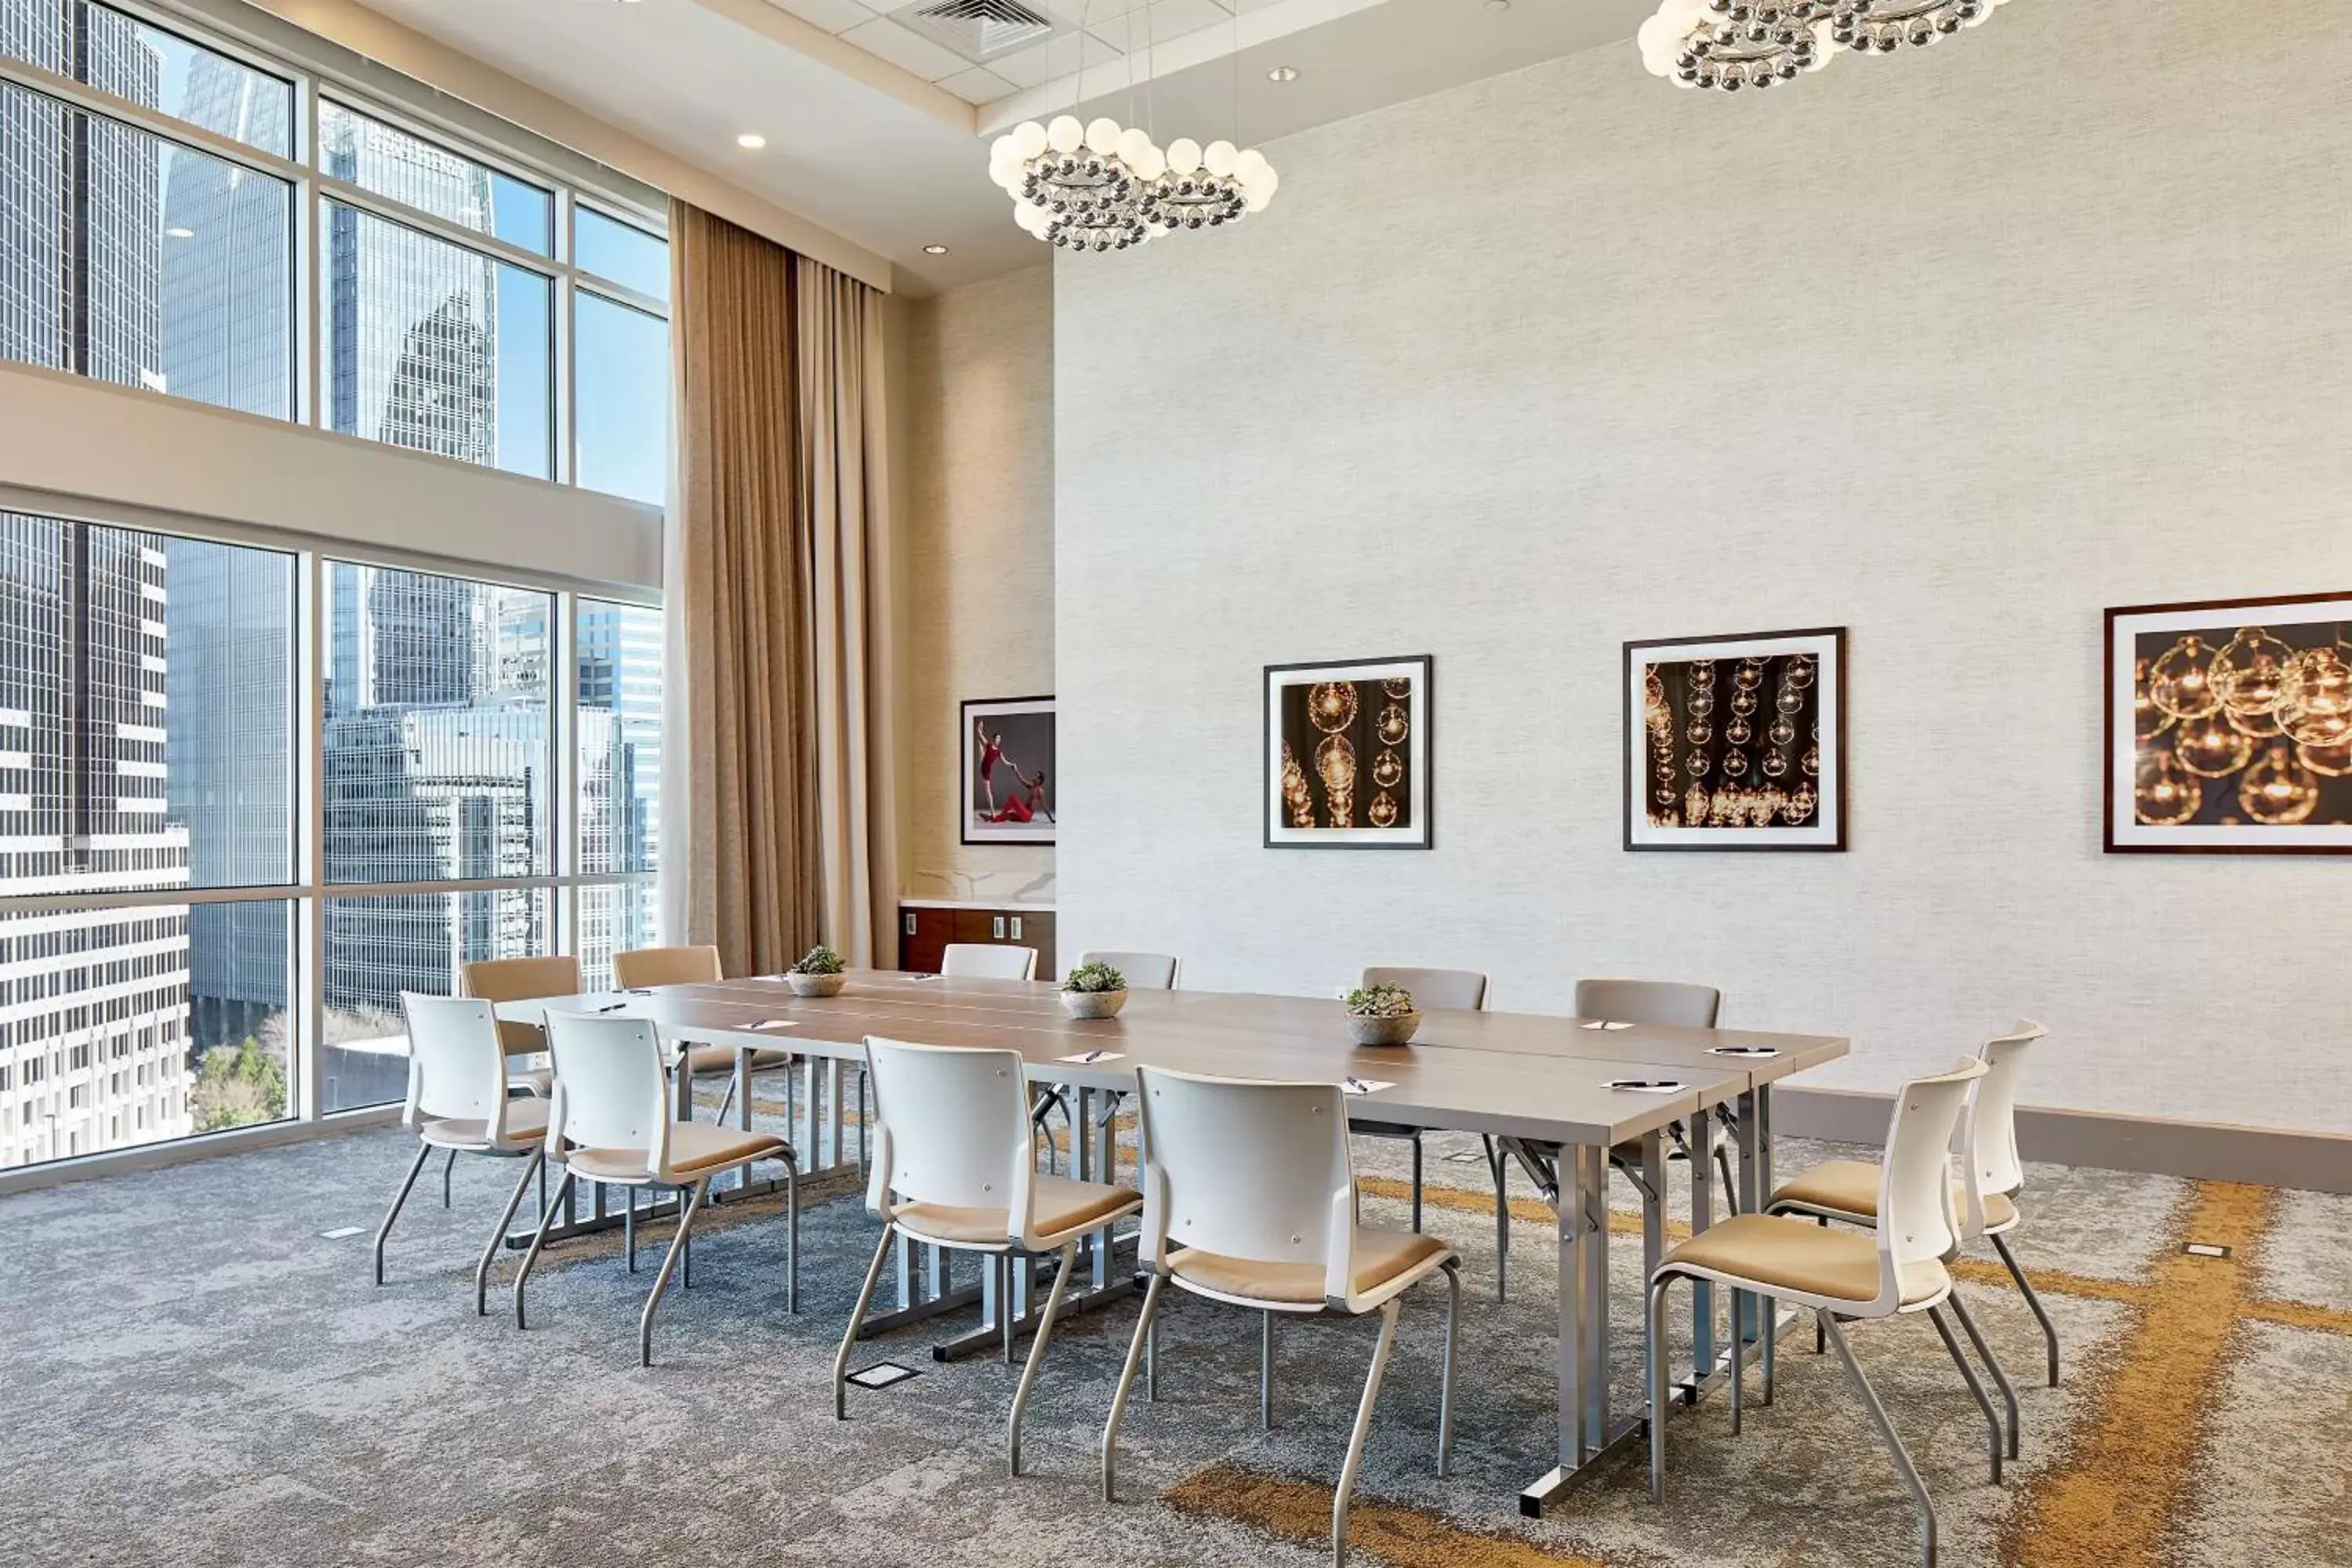 Meeting/conference room, Restaurant/Places to Eat in Hampton Inn & Suites Atlanta-Midtown, Ga